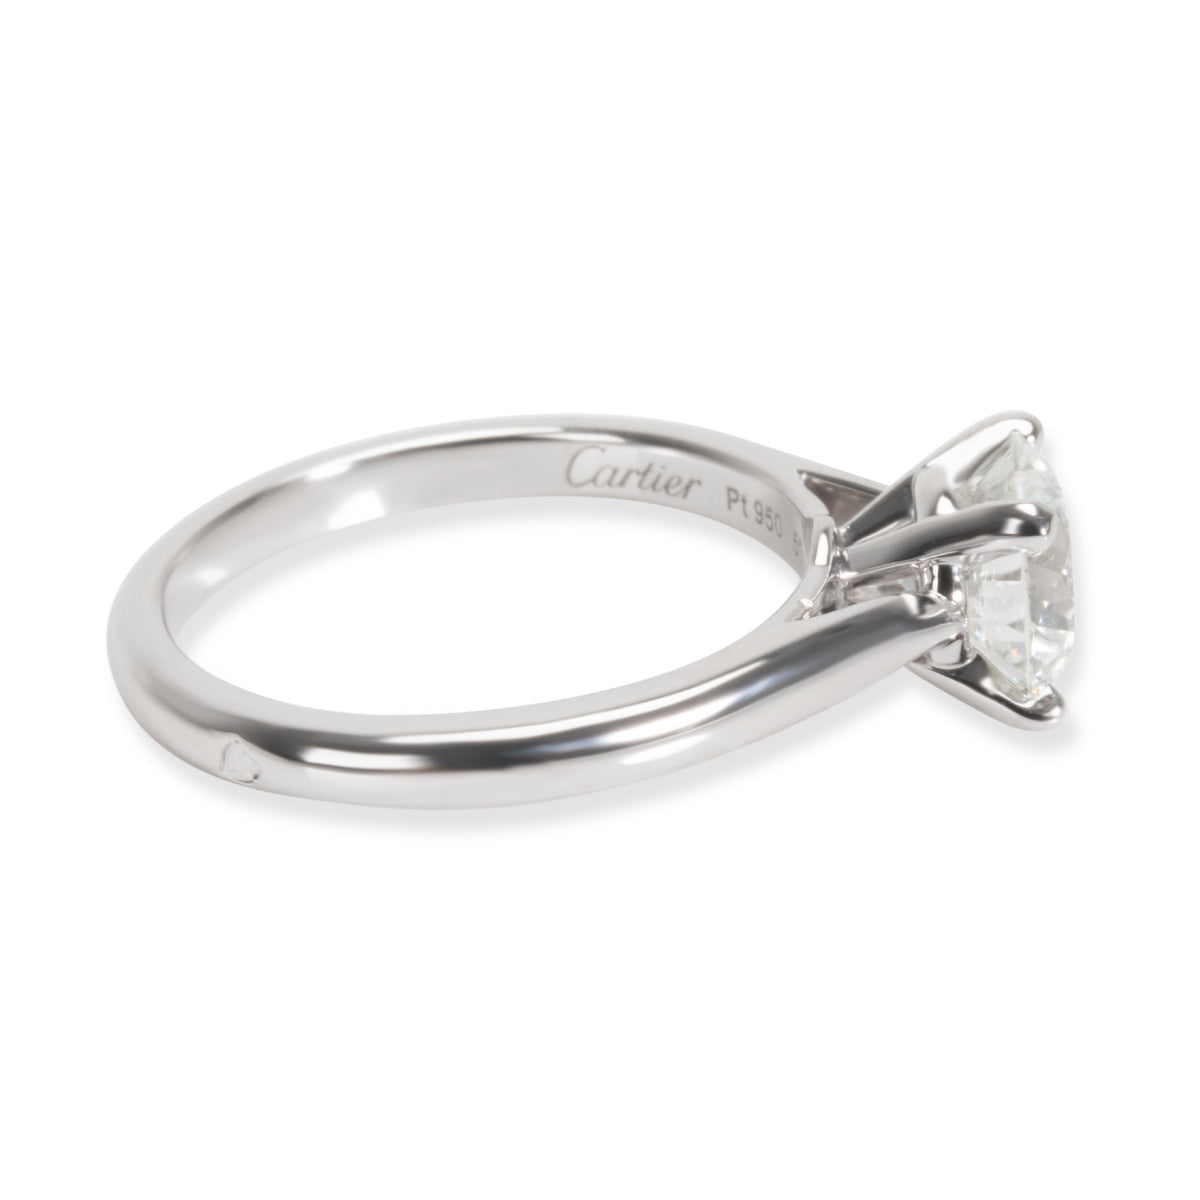 Cartier Solitaire 1895 Diamond Engagement Ring in  Platinum G VVS2 1.31 CTW